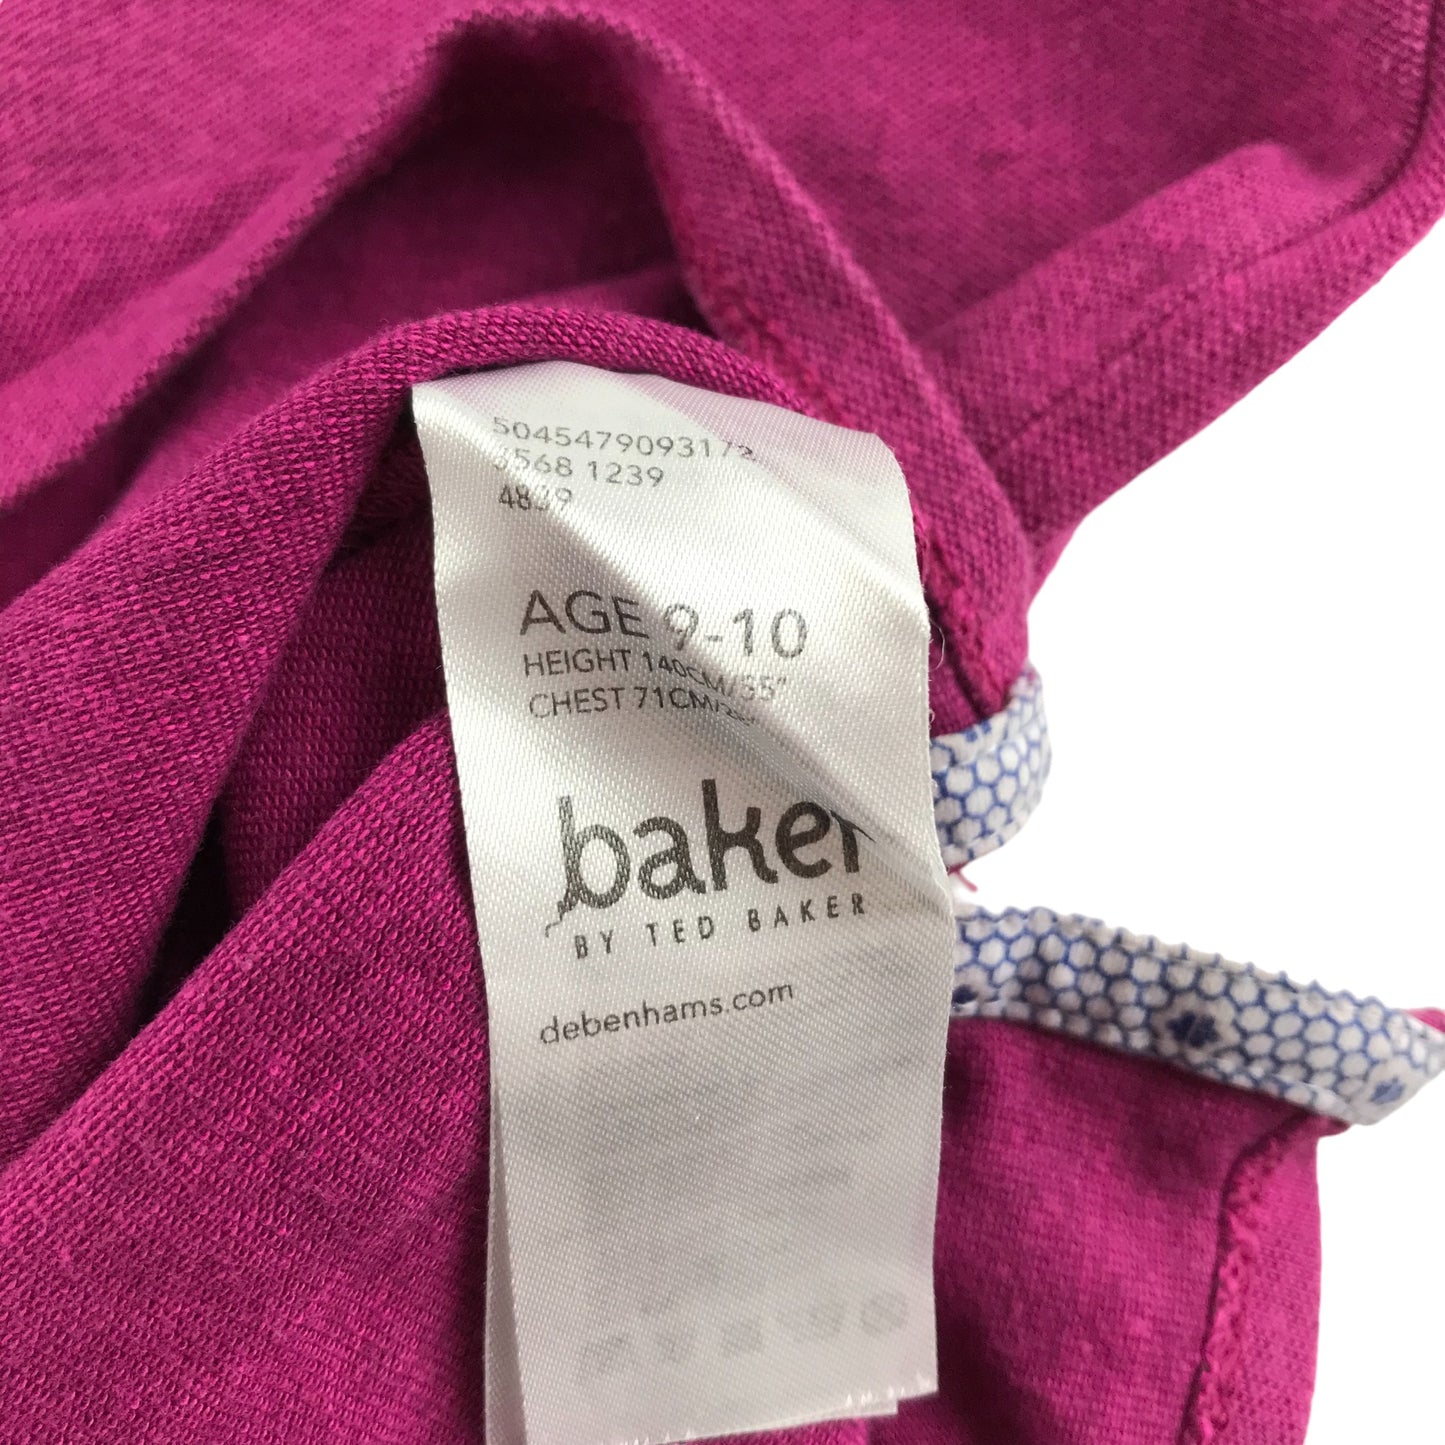 Ted Baker Polo Shirt Age 9 Dark Fuchsia Pink Short Sleeve